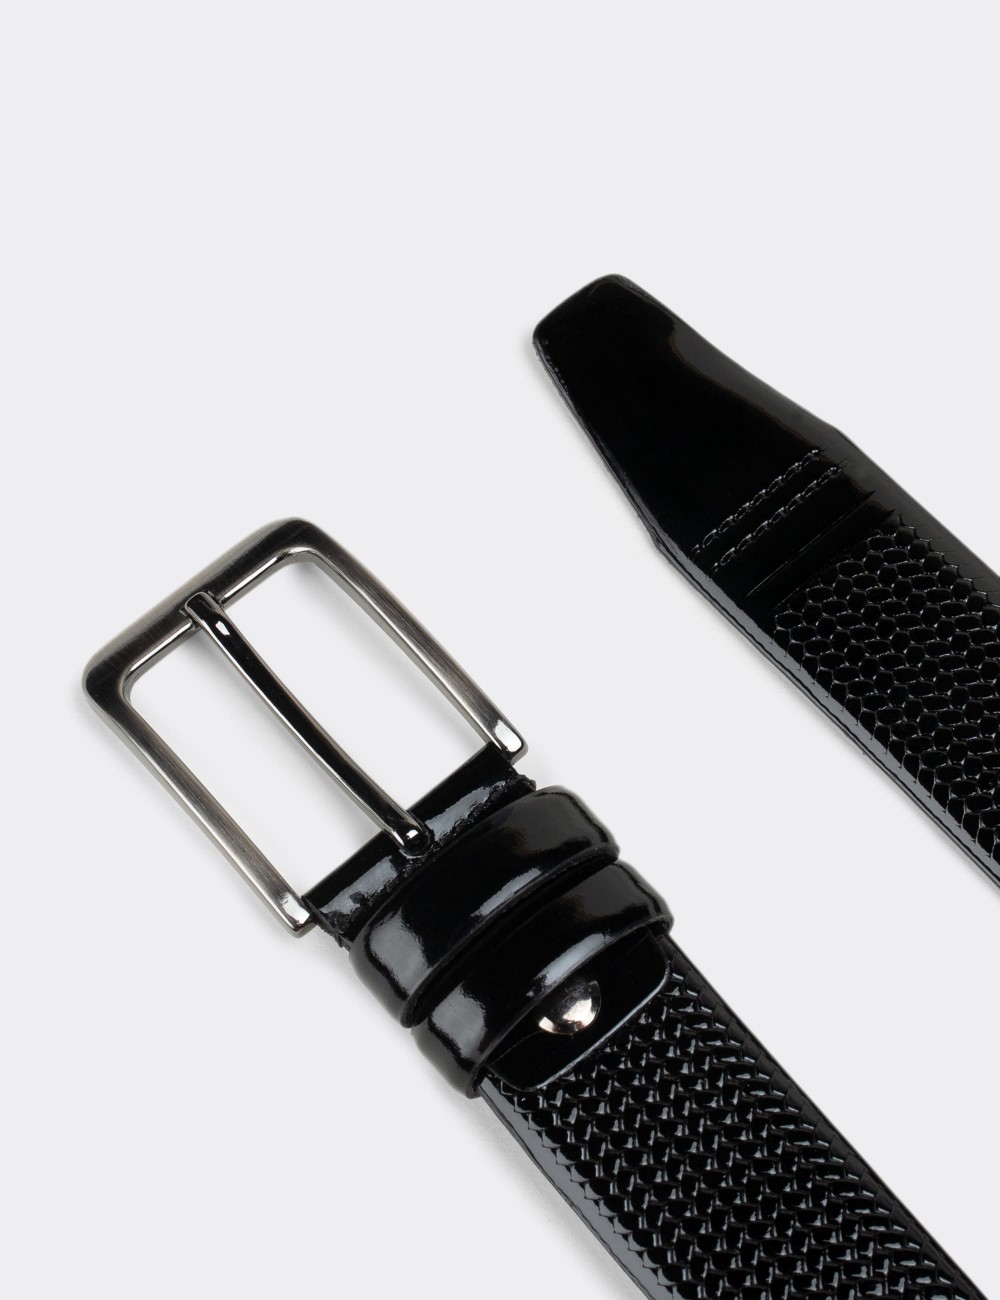 Patent Leather Black Men's Belt - K0404MSYHW01